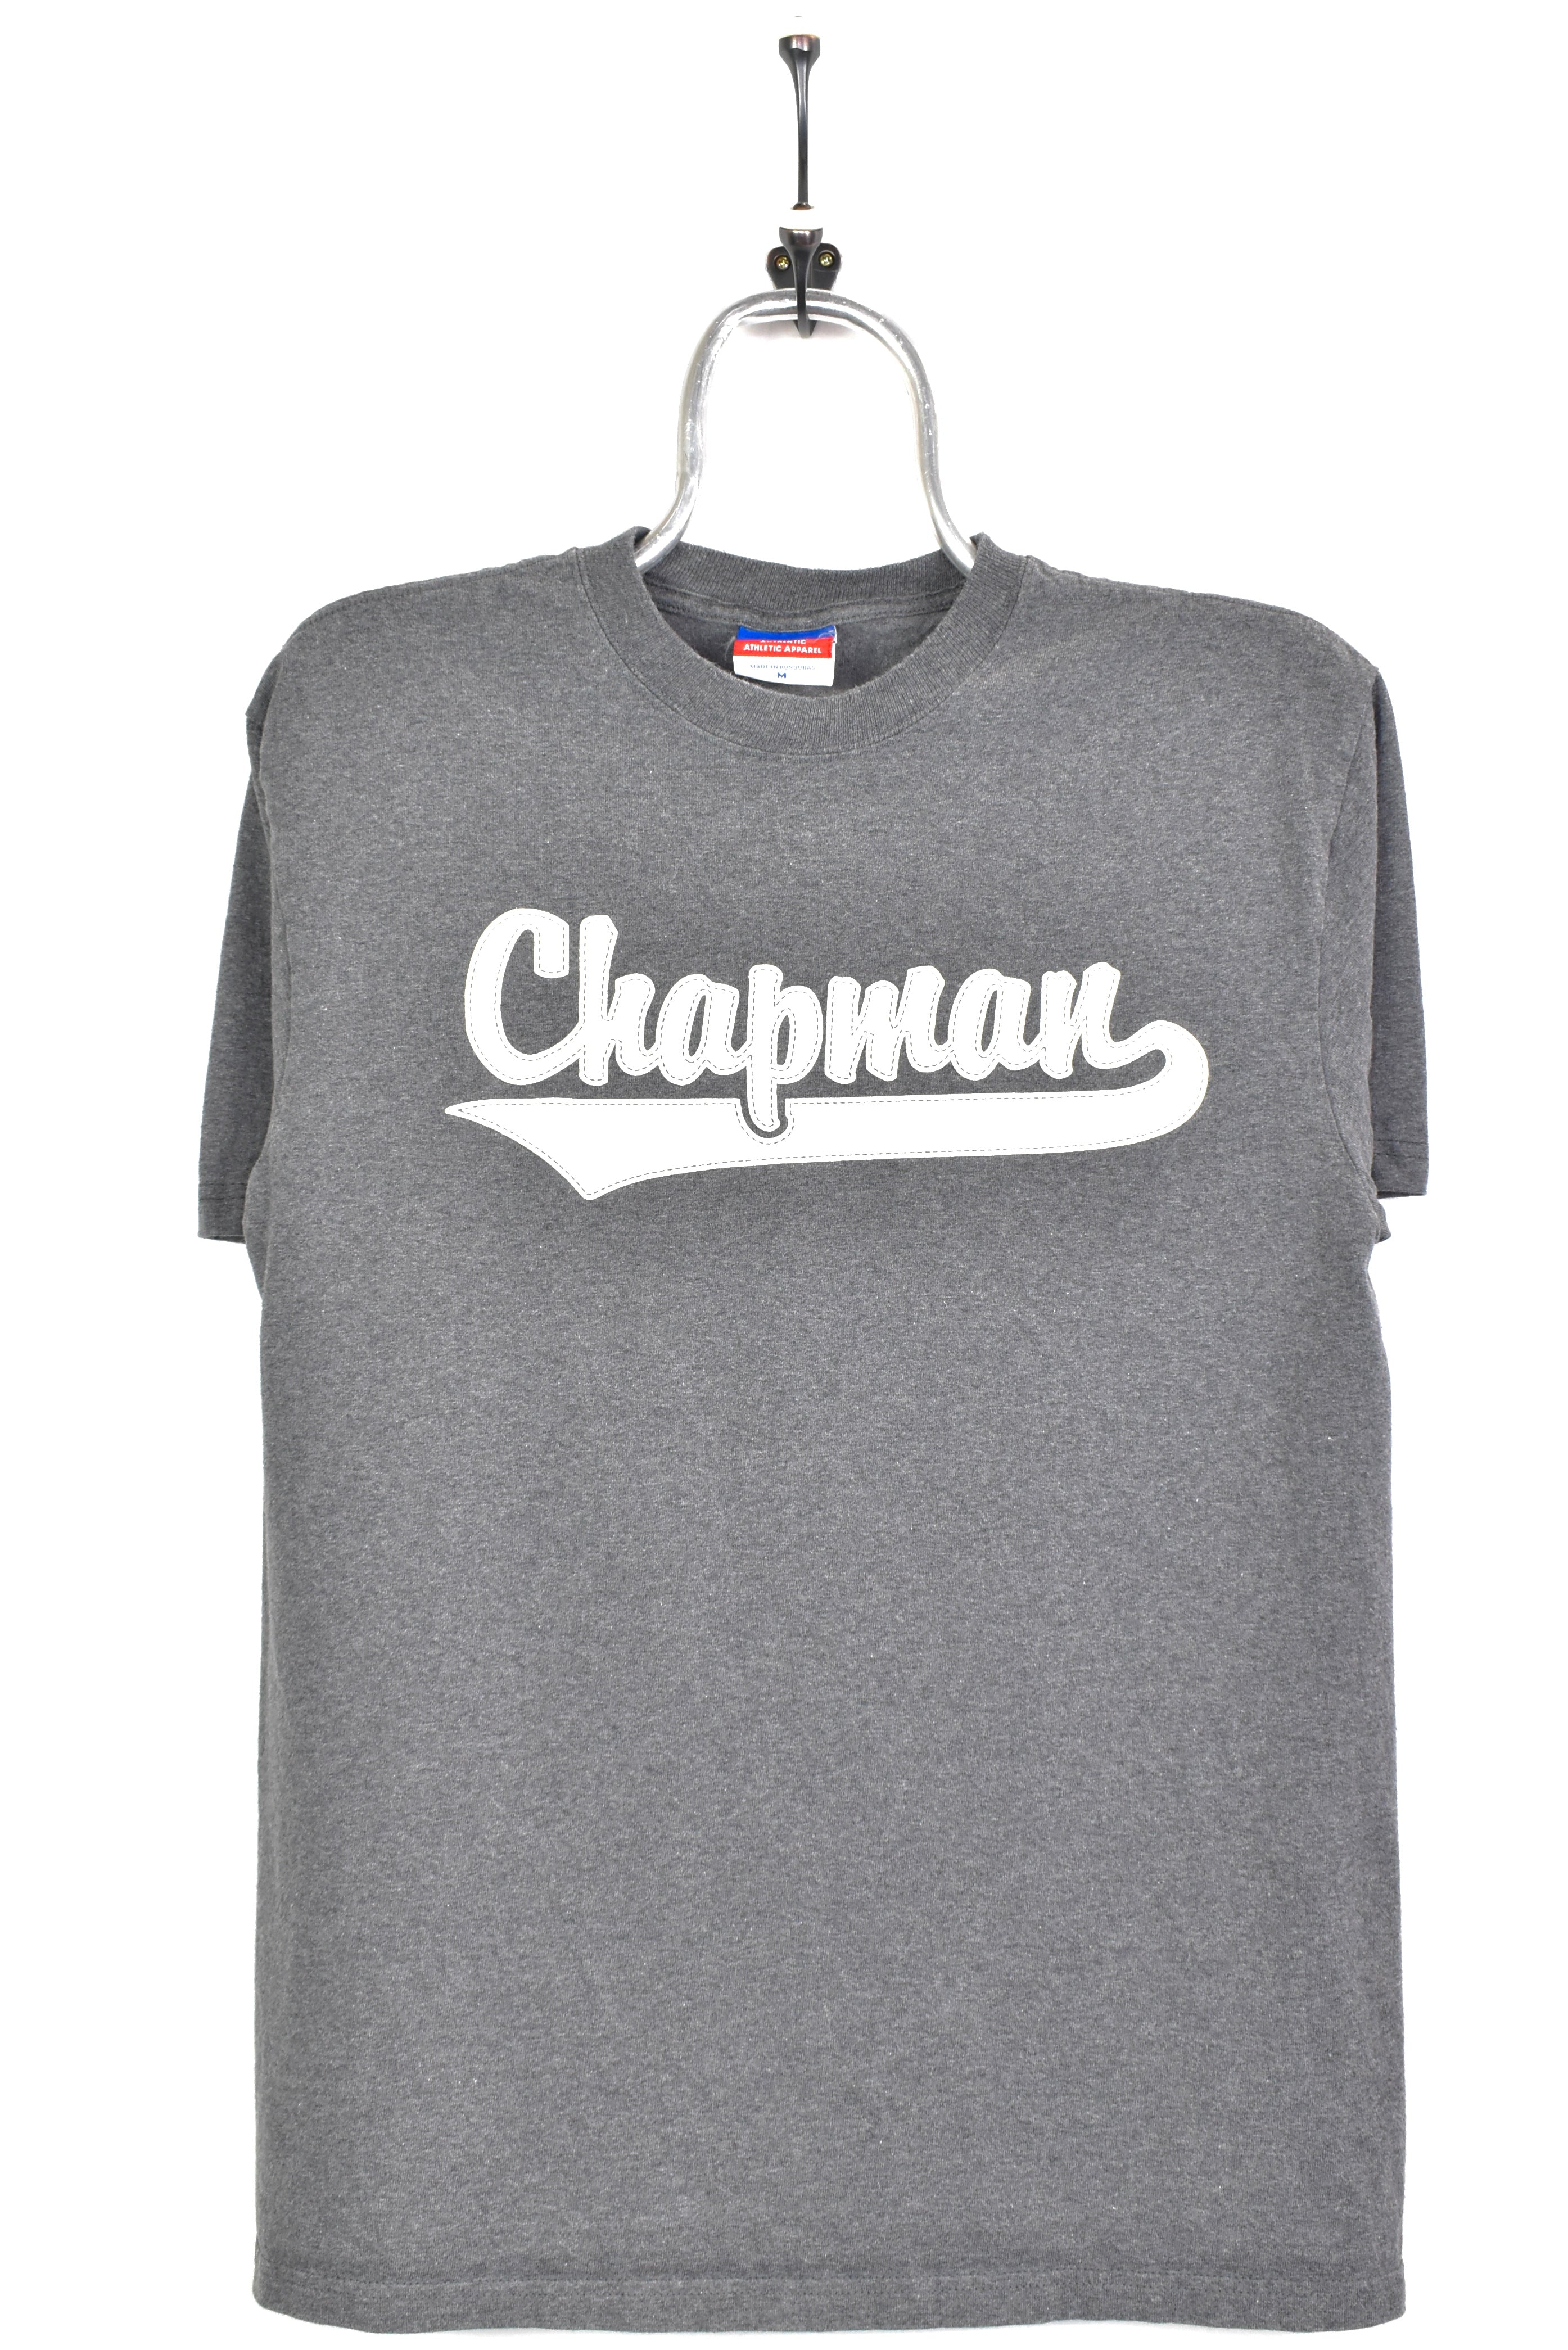 Vintage Champion grey t-shirt | Medium CHAMPION